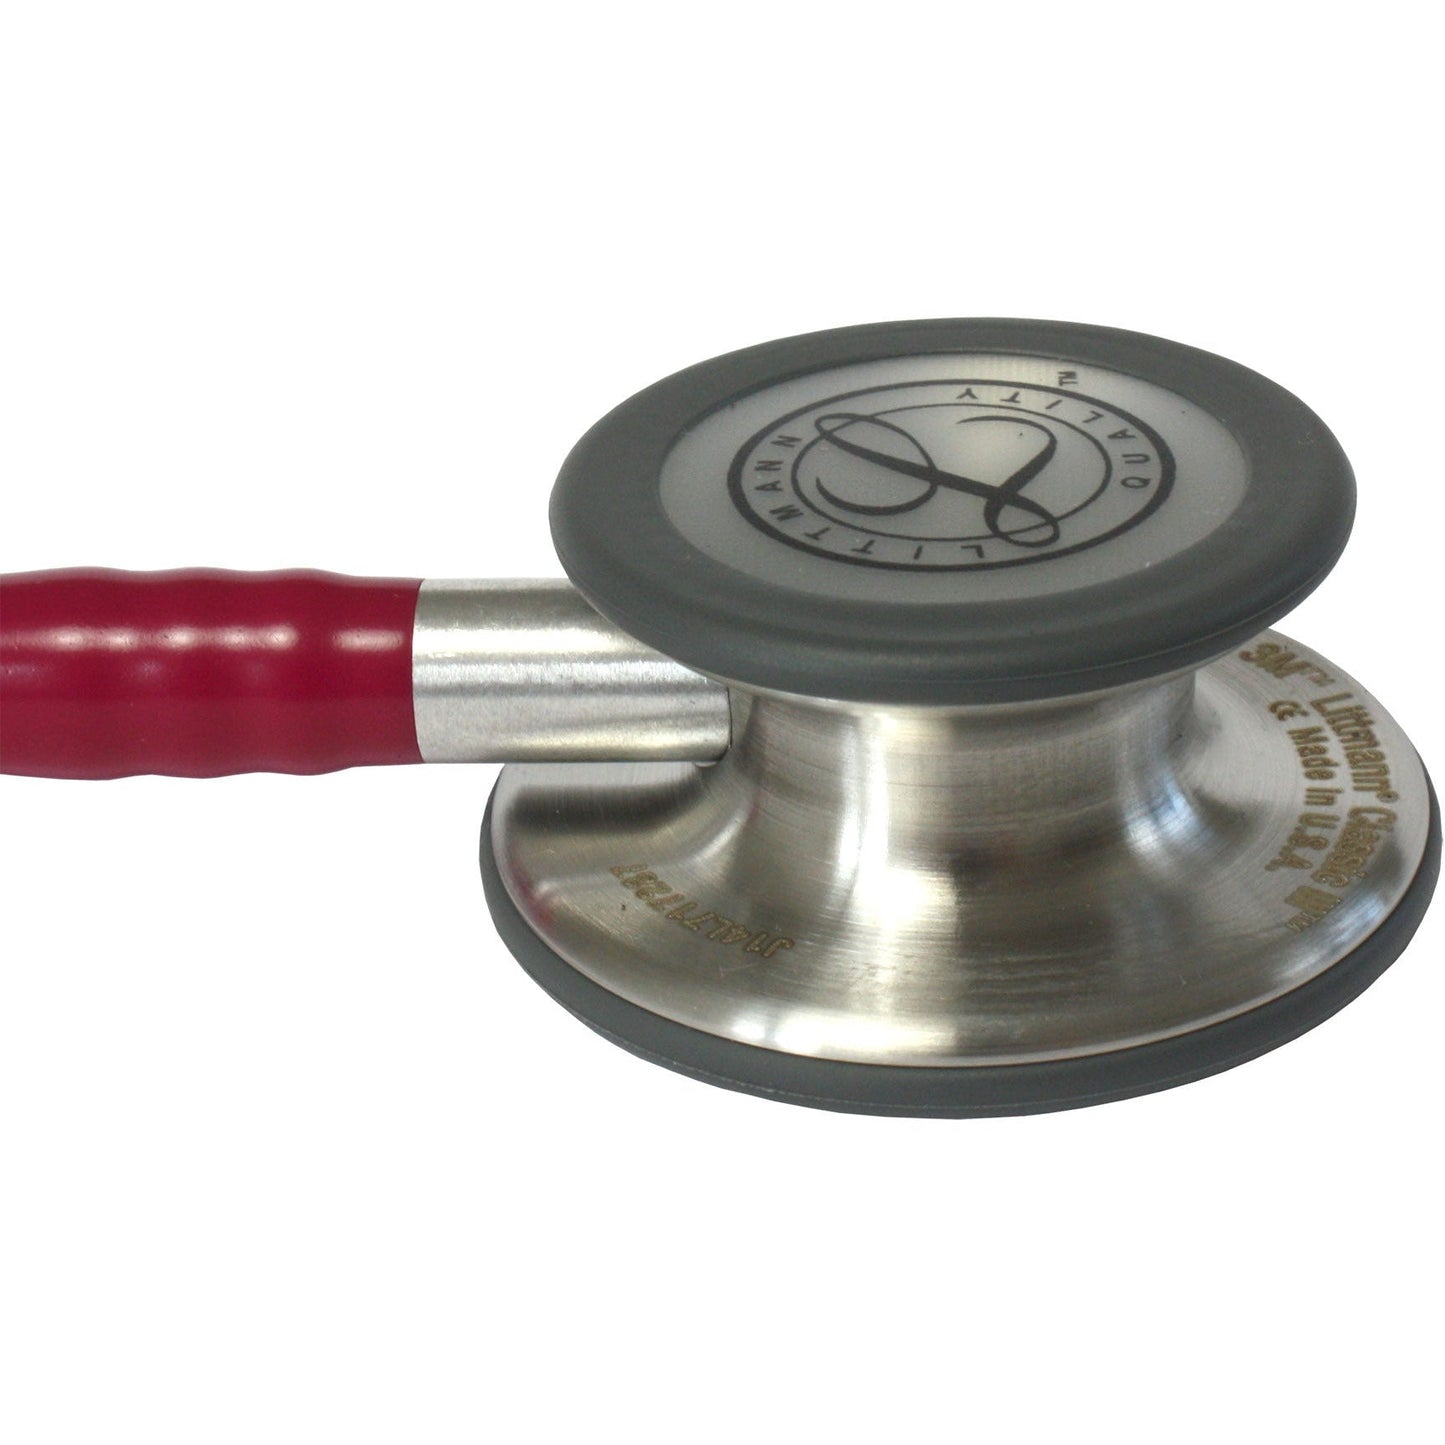 Littmann Classic III Monitoring Stethoscope: Raspberry 5648